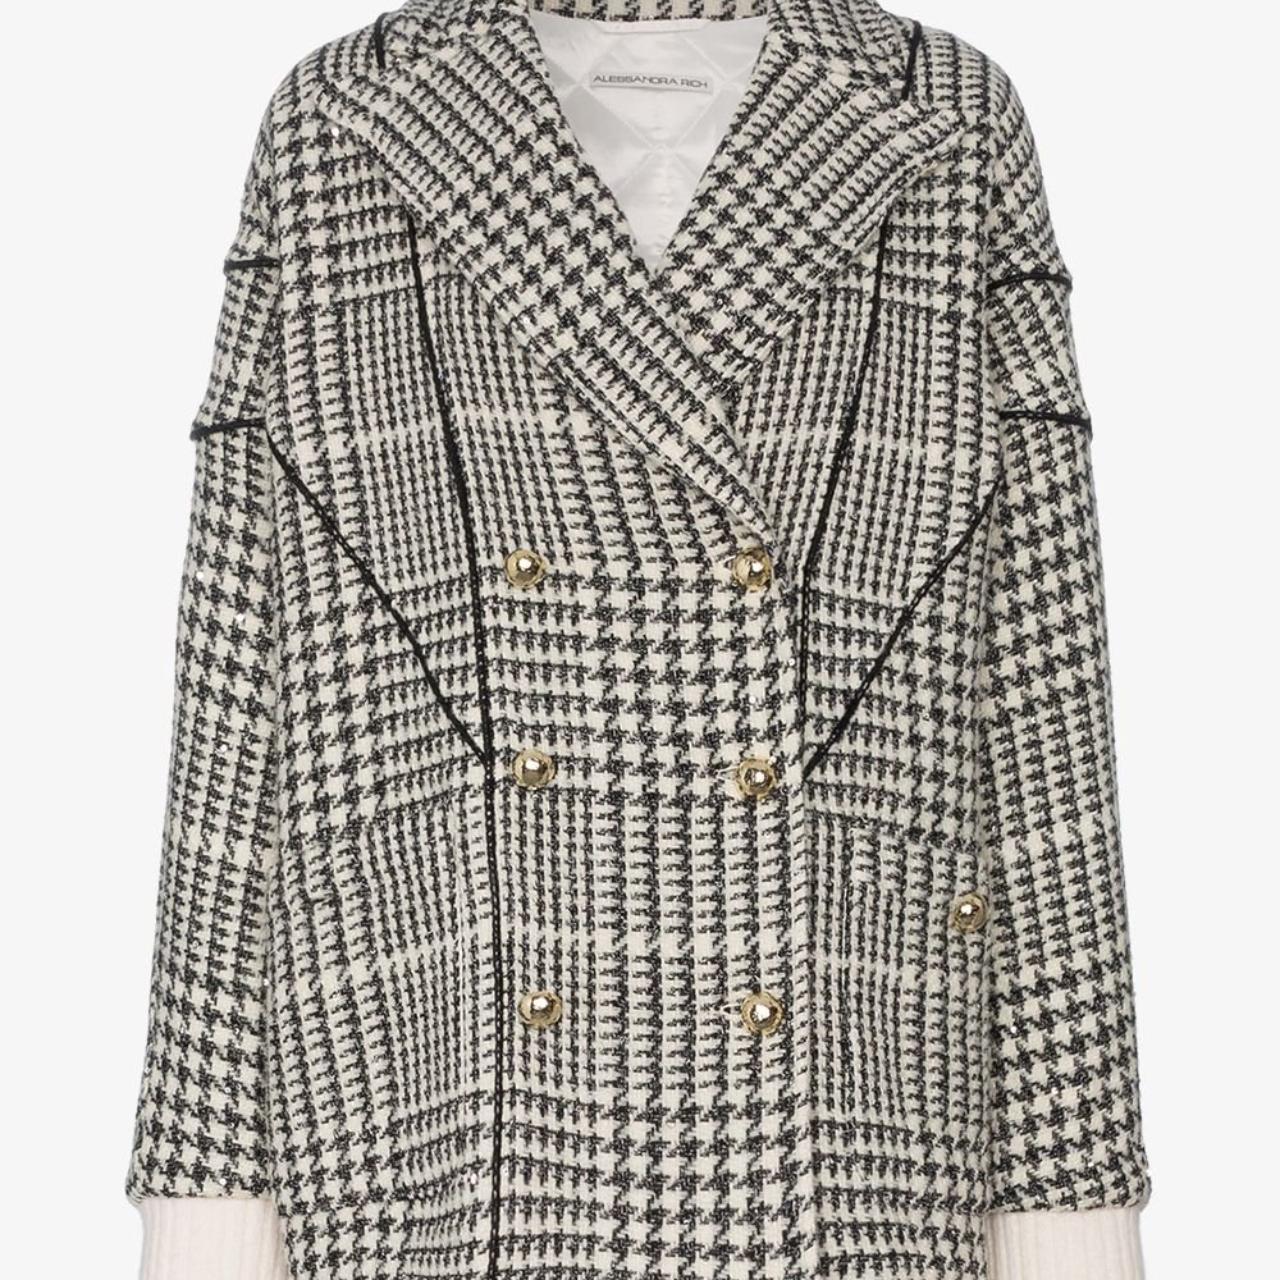 Alessandra RICH (similar) style coat. Wool. Good... - Depop